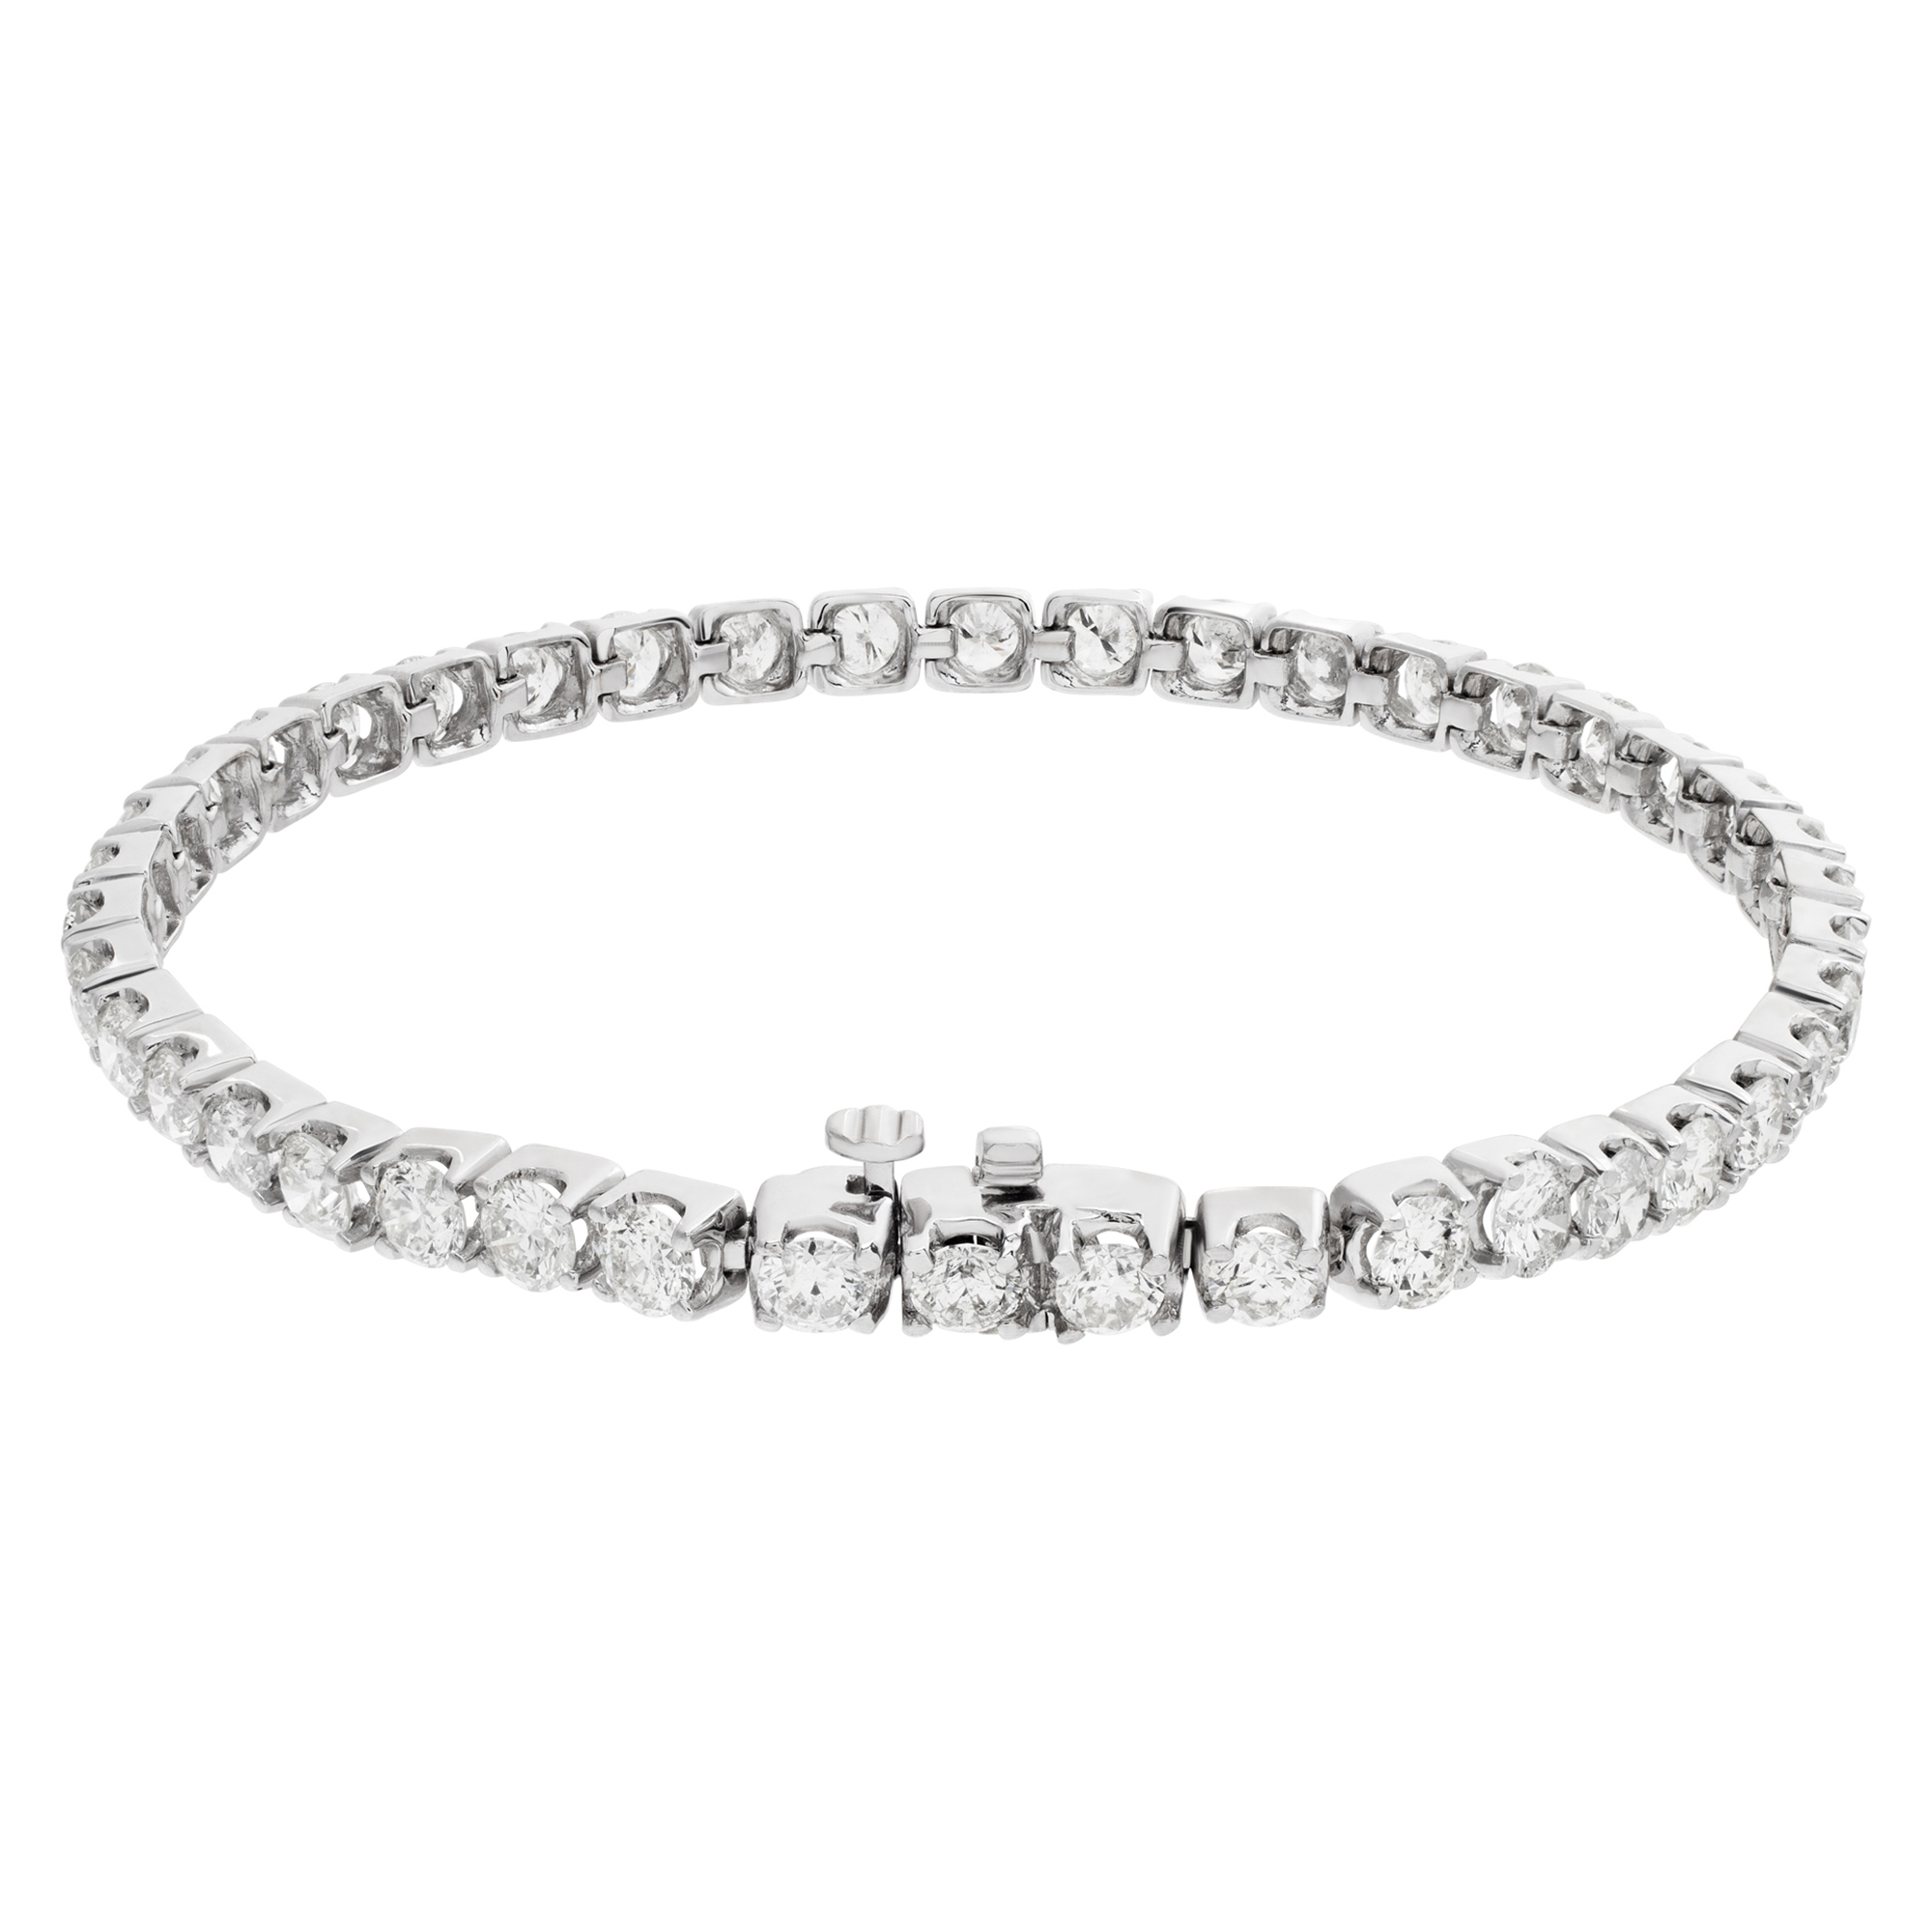 Sparkling line diamond bracelet with 8.09 carat full cut round diamonds set in 14K white gold image 3